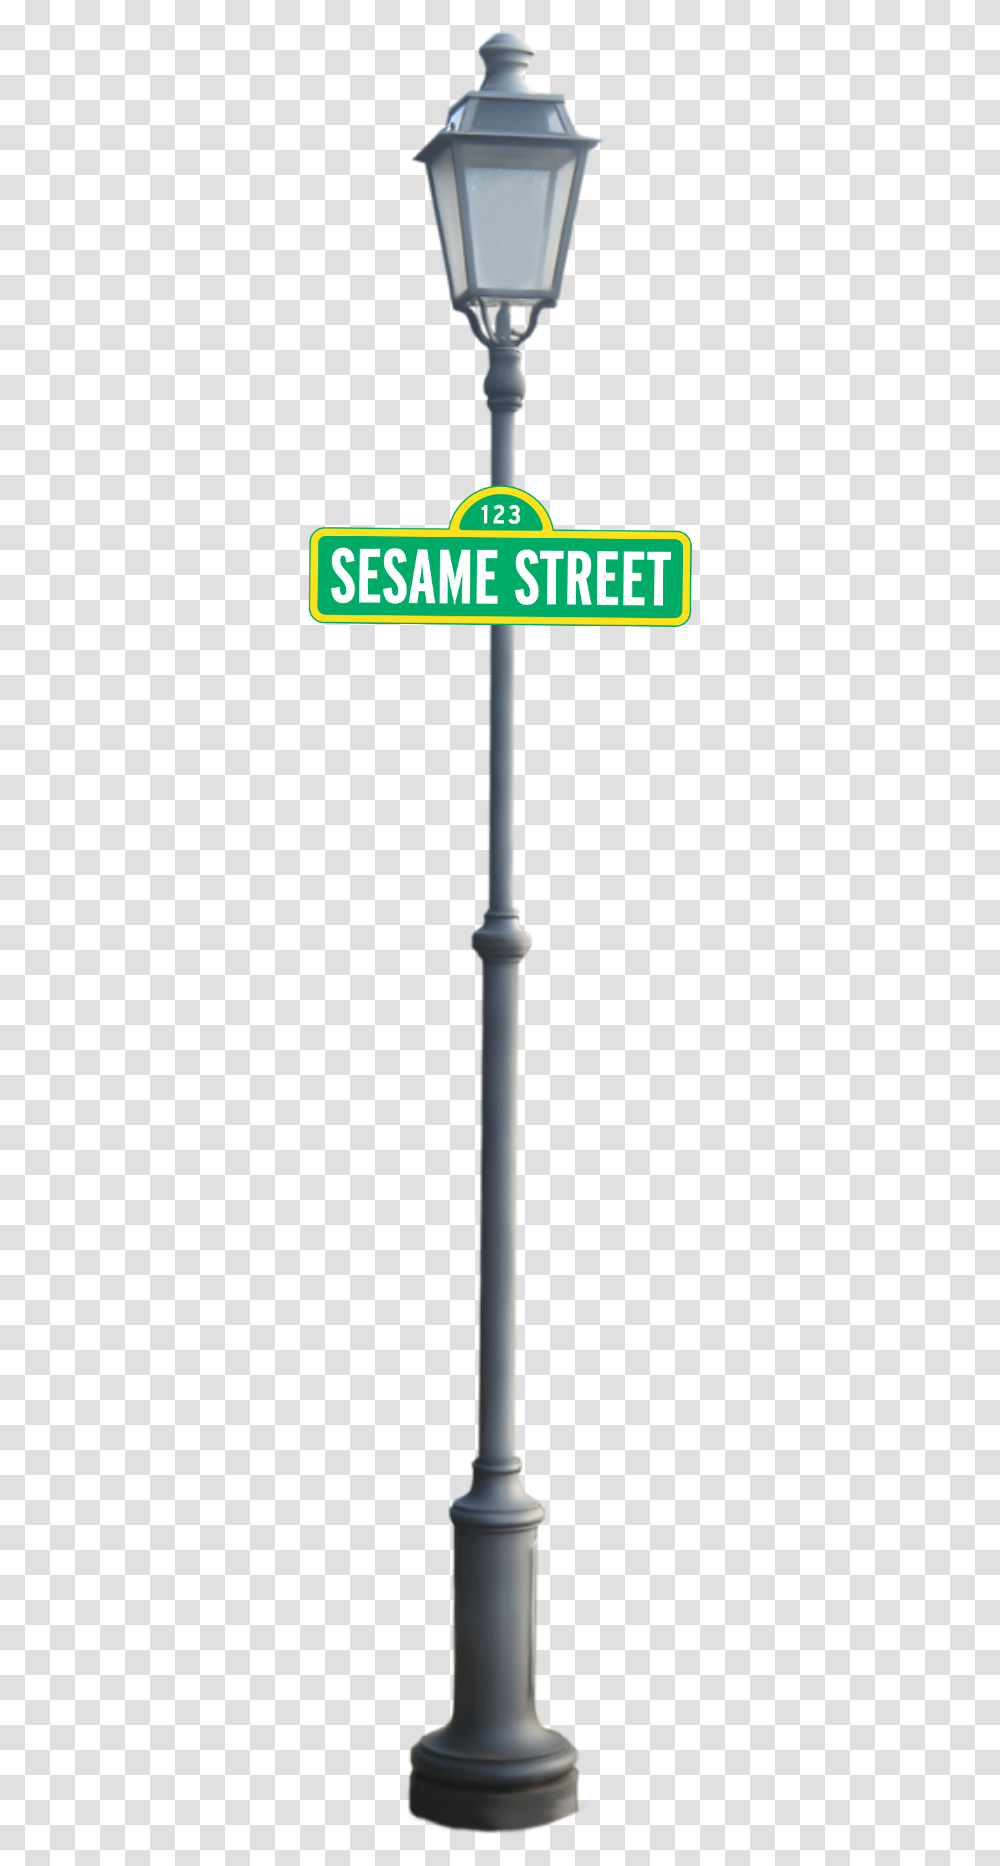 Sesame Street Light Pole, Lamp Post Transparent Png